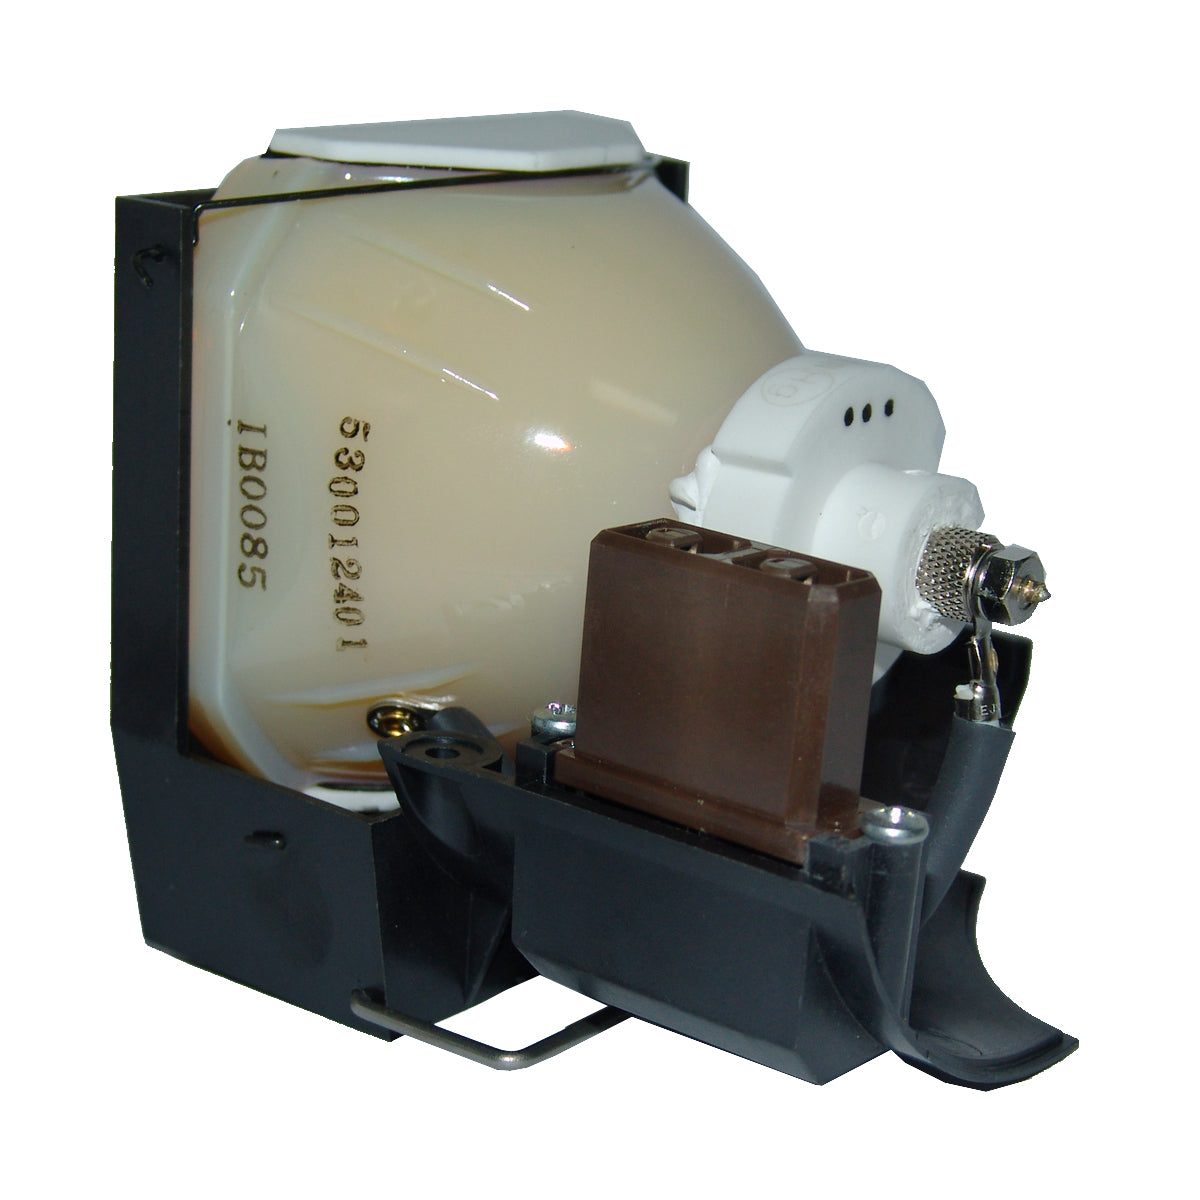 Telex NSH-1 Ushio Projector Lamp Module